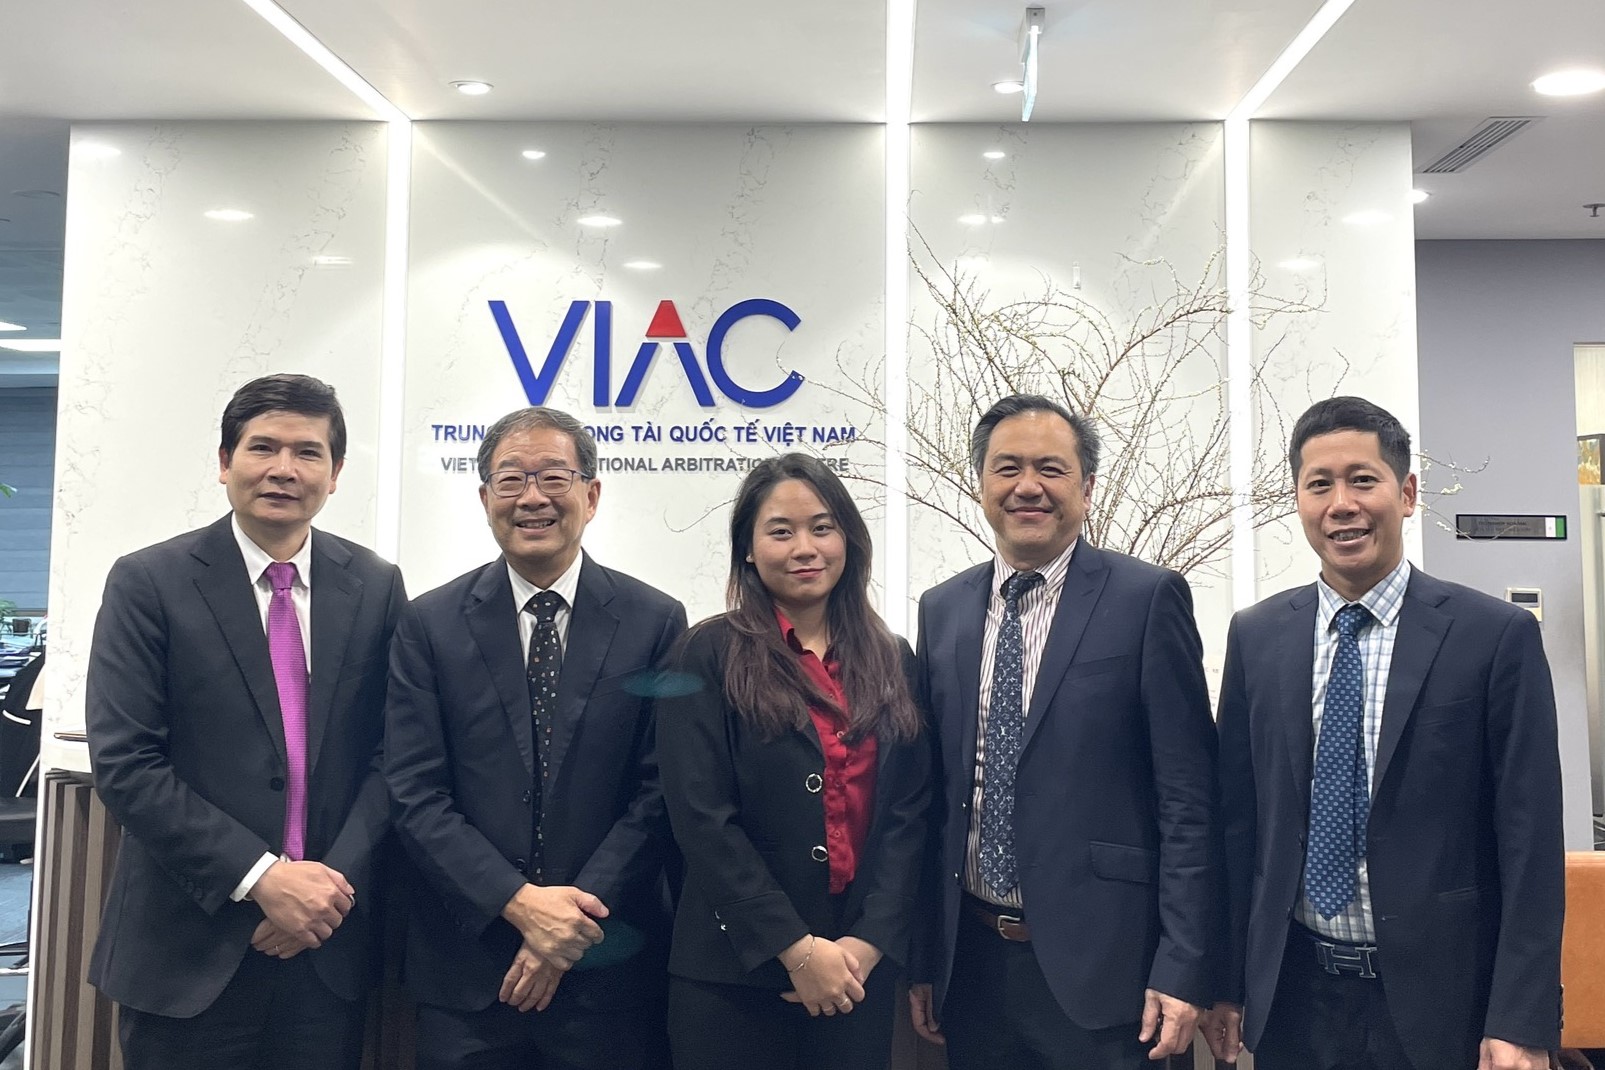 Visit to VIAC (L-R): Vu Anh Duong, George Lim SC, Thu Nguyen, Chuan Wee Meng, Phan Trong Dat